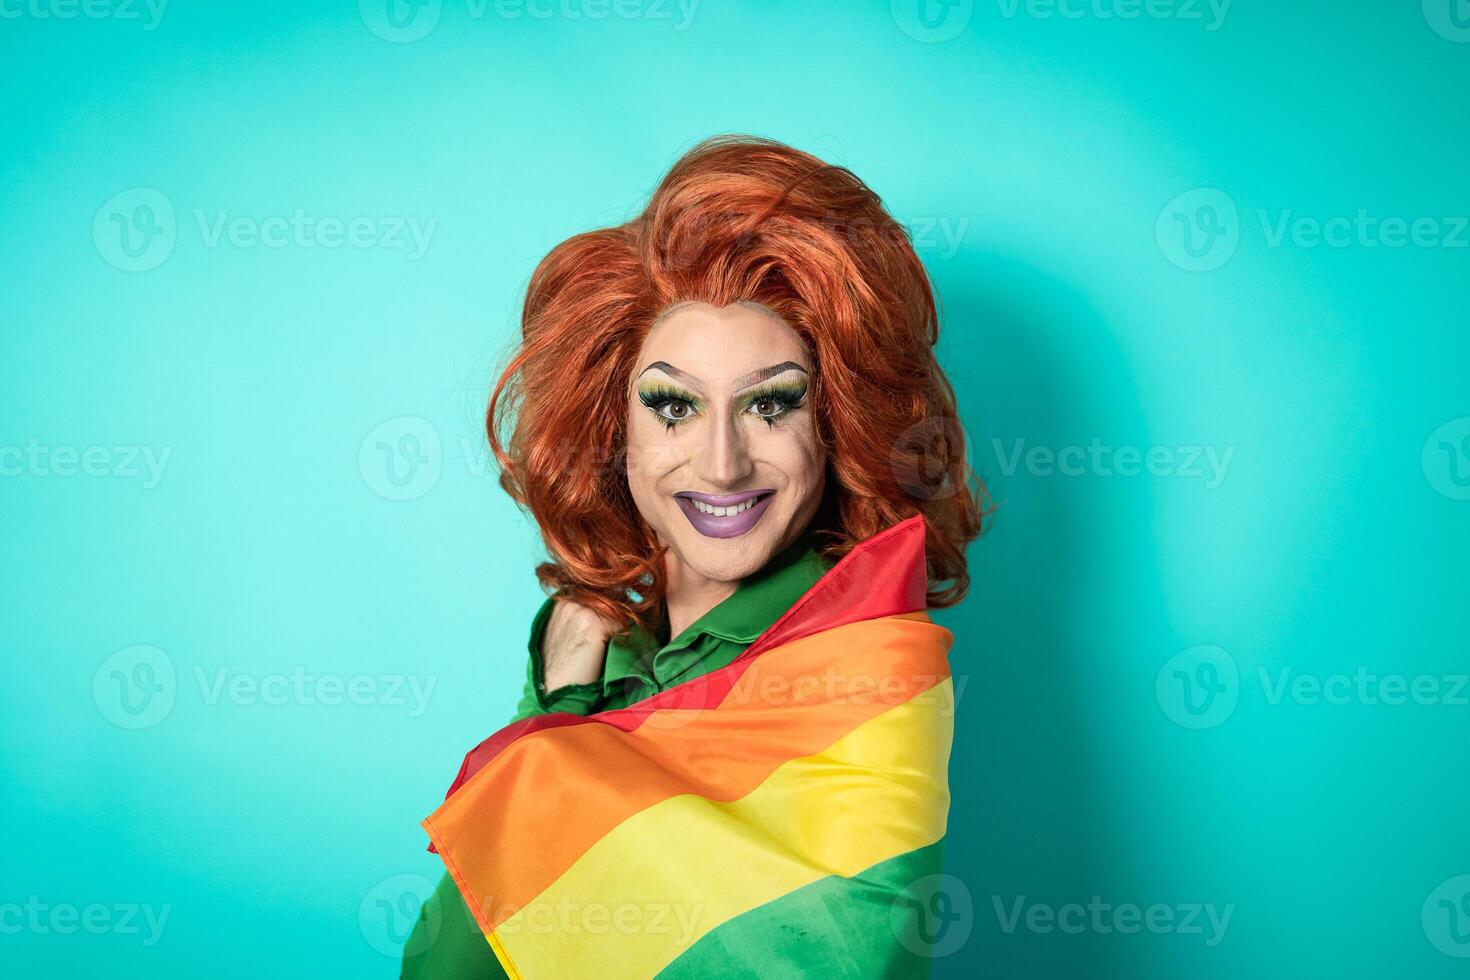 gelukkig slepen koningin vieren homo trots Holding regenboog vlag - lgbtq sociaal beweging concept foto